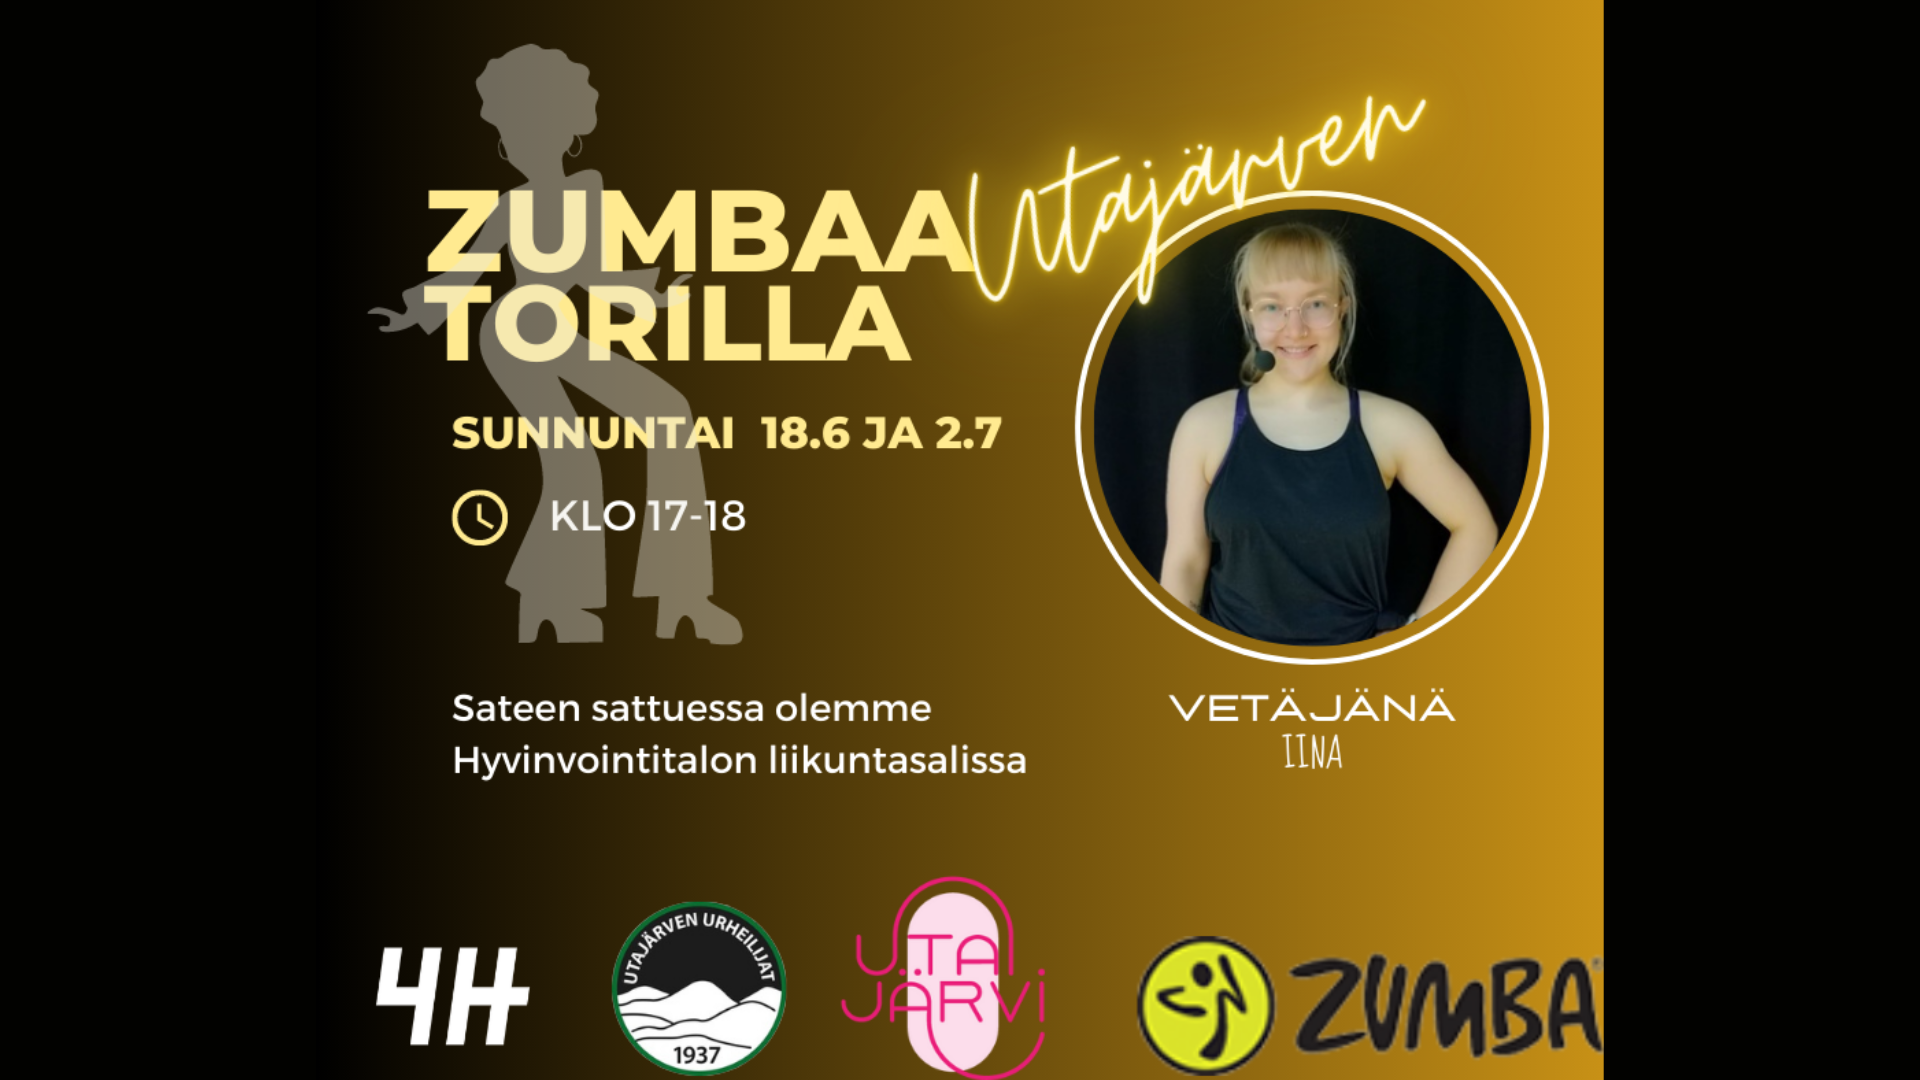 Zumbaa torilla